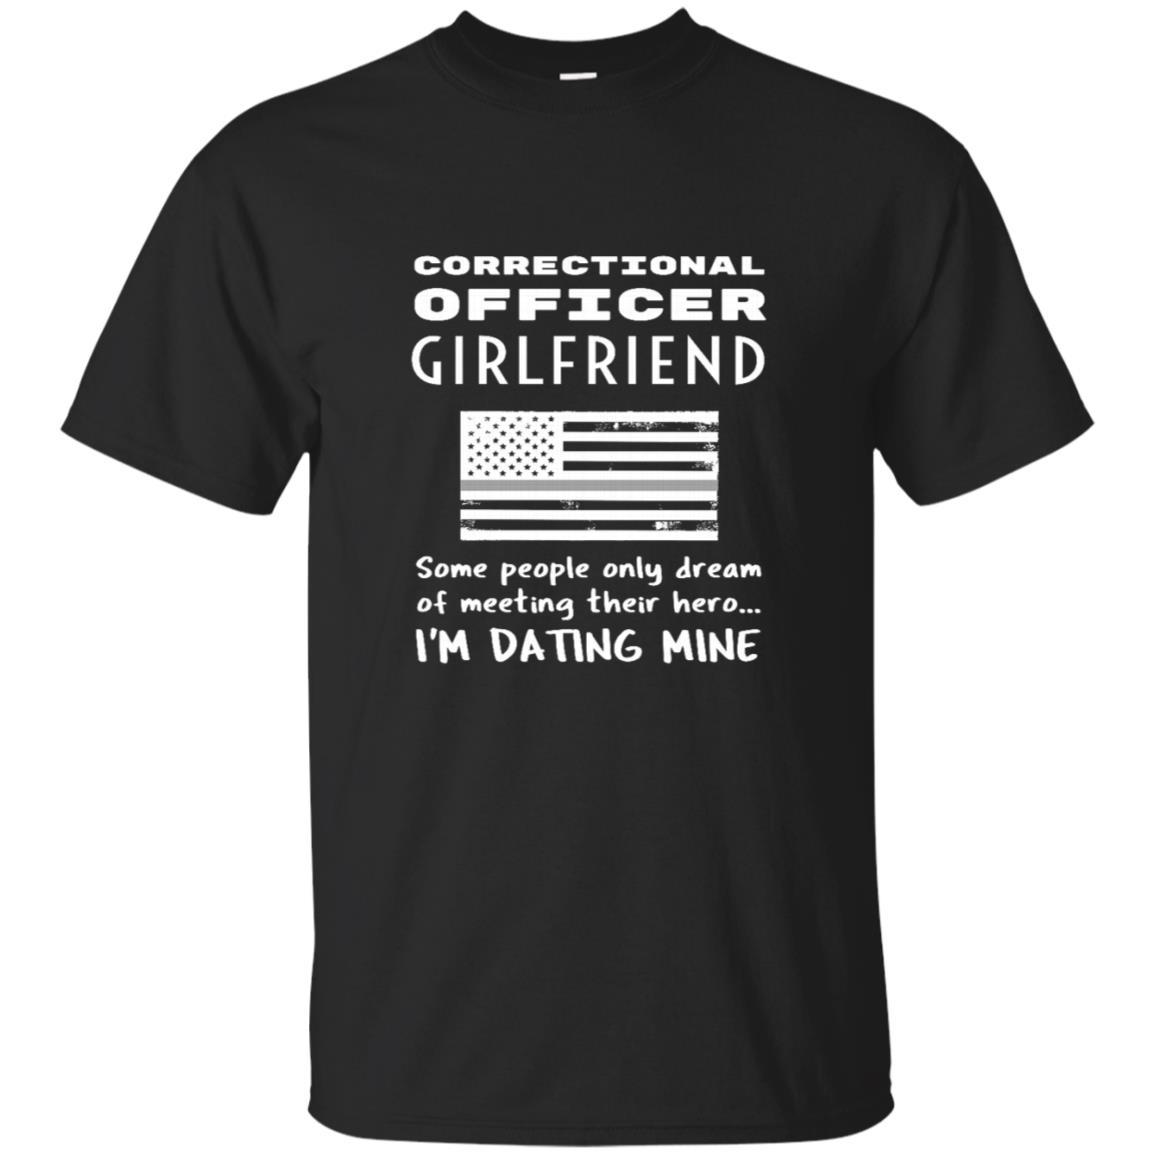 Correctional Officer Girlfriend Funny Gift T-shirt For Women